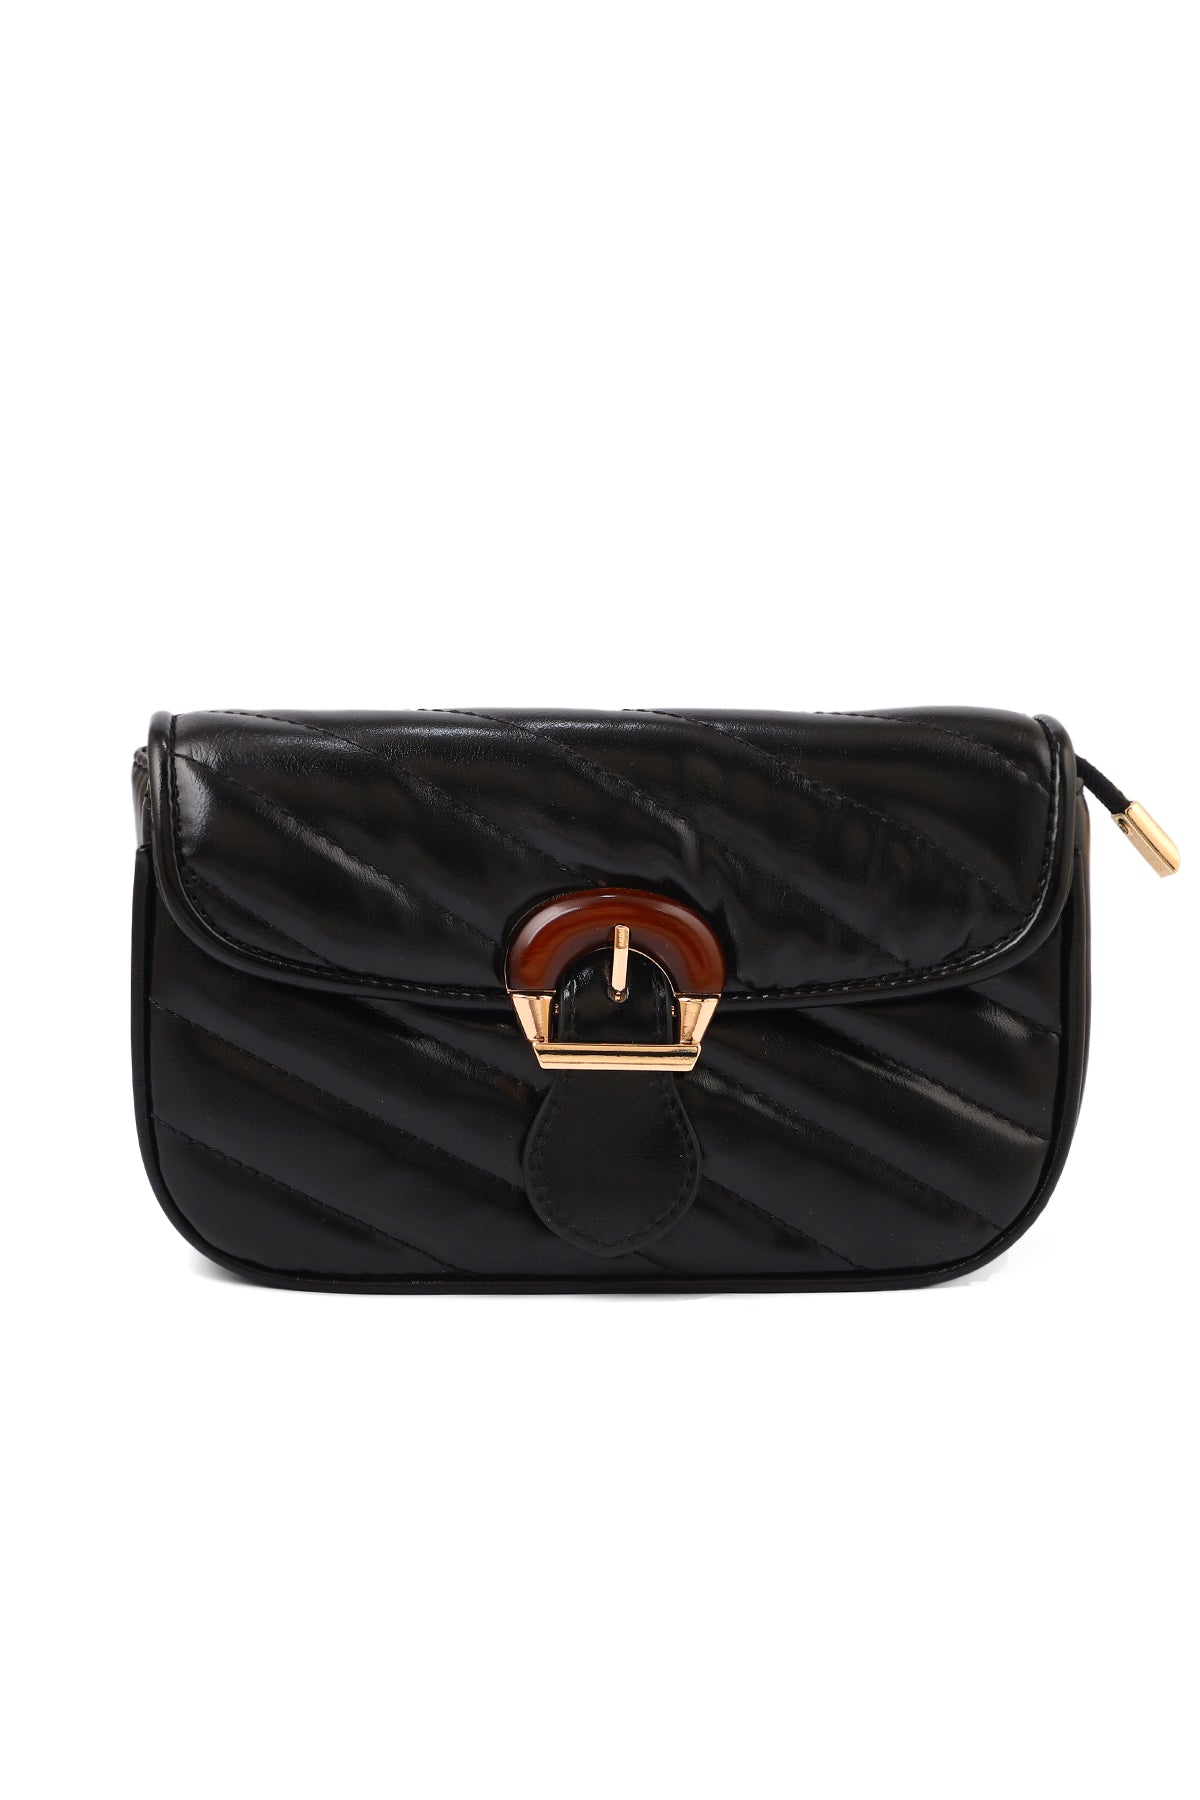 Baguette Shoulder Bags B15085-Black